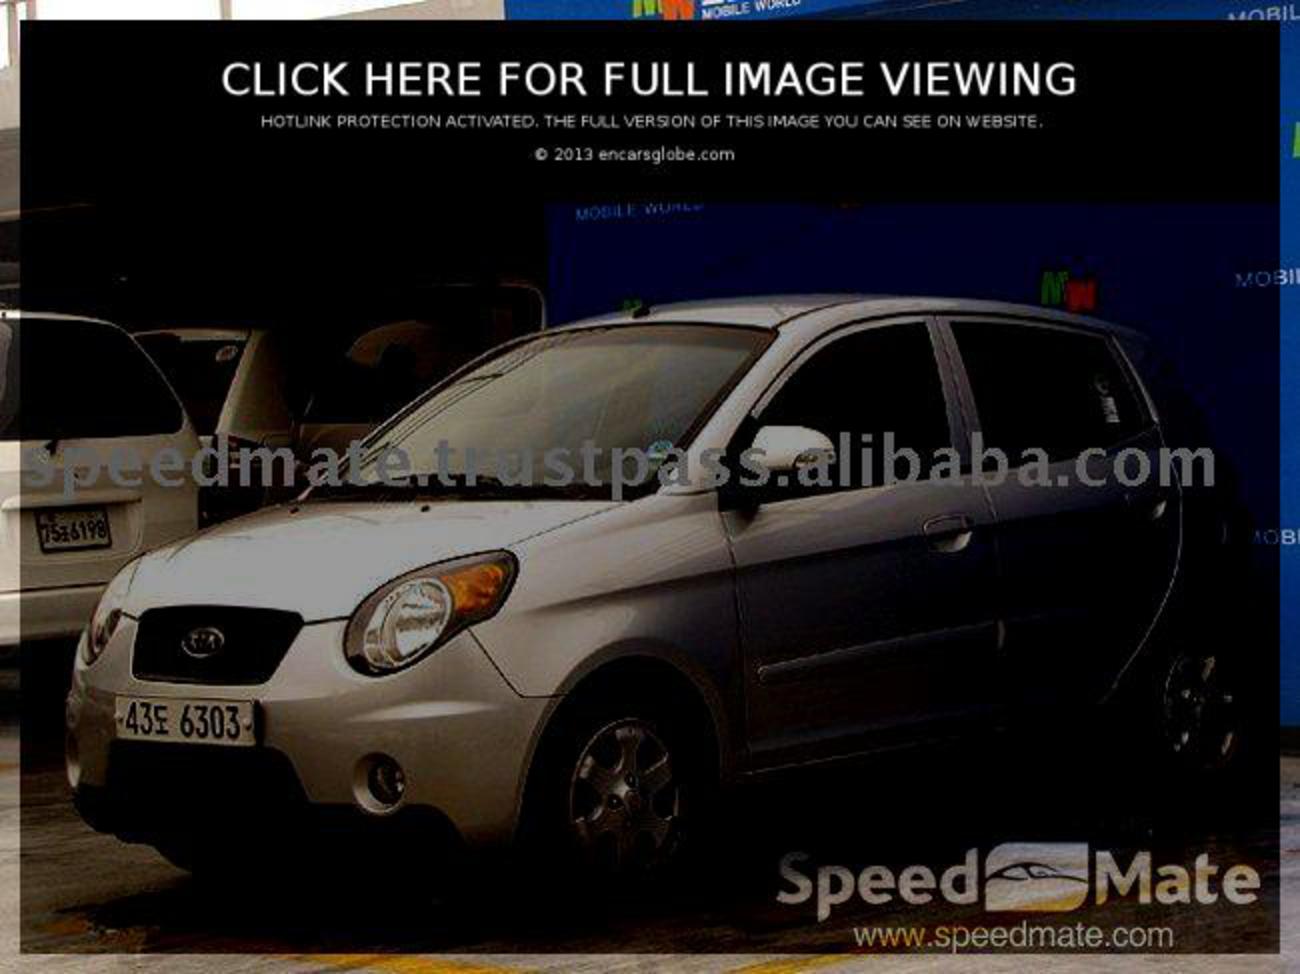 Kia Sportage Grand Photo Gallery: Photo #03 out of 12, Image Size ...